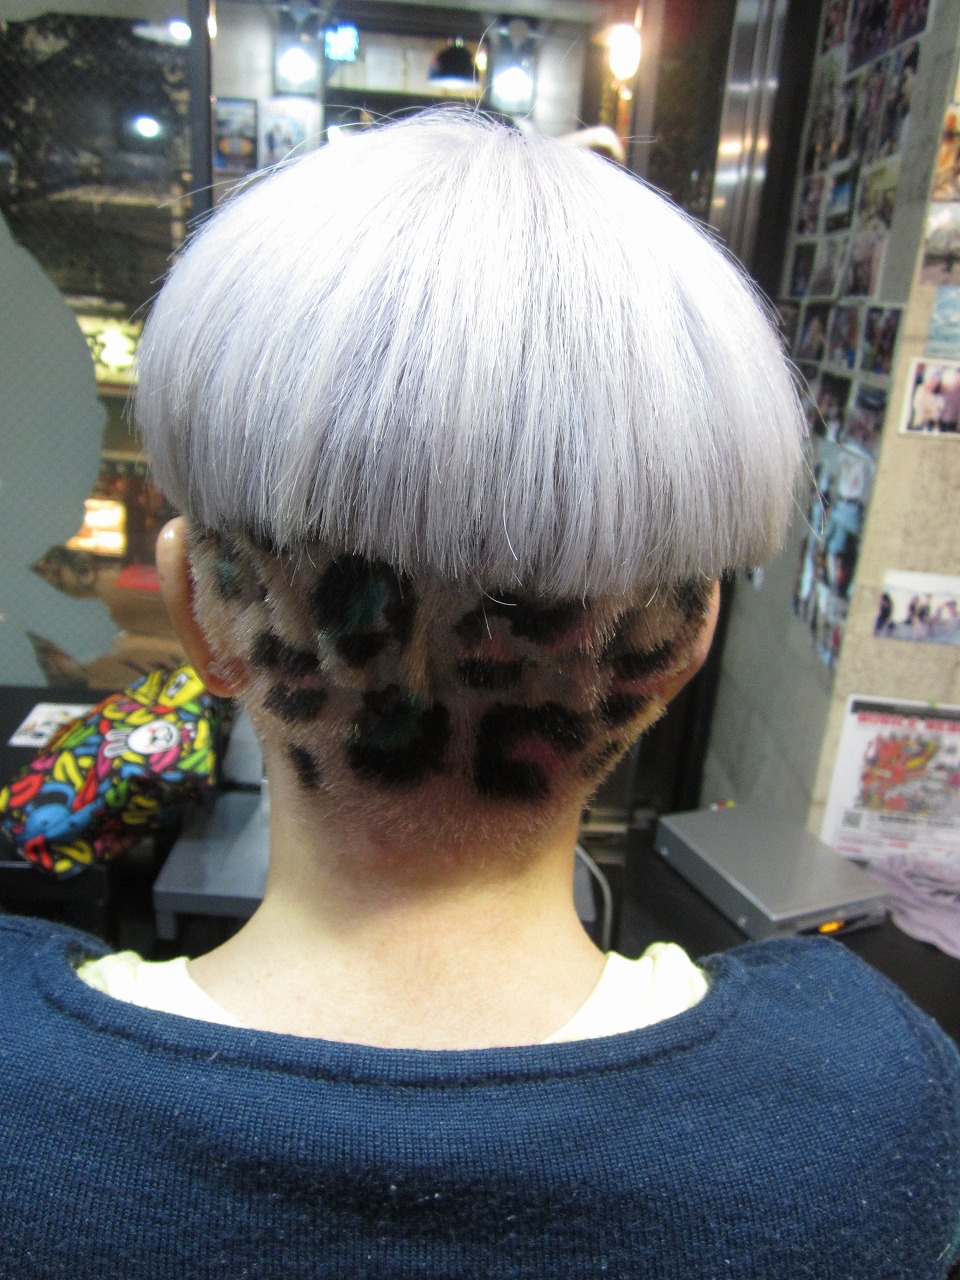 Gドラゴンヘアスタイル 刈り上げ豹柄 Trick Storeのヘアスタイル ヘアログ